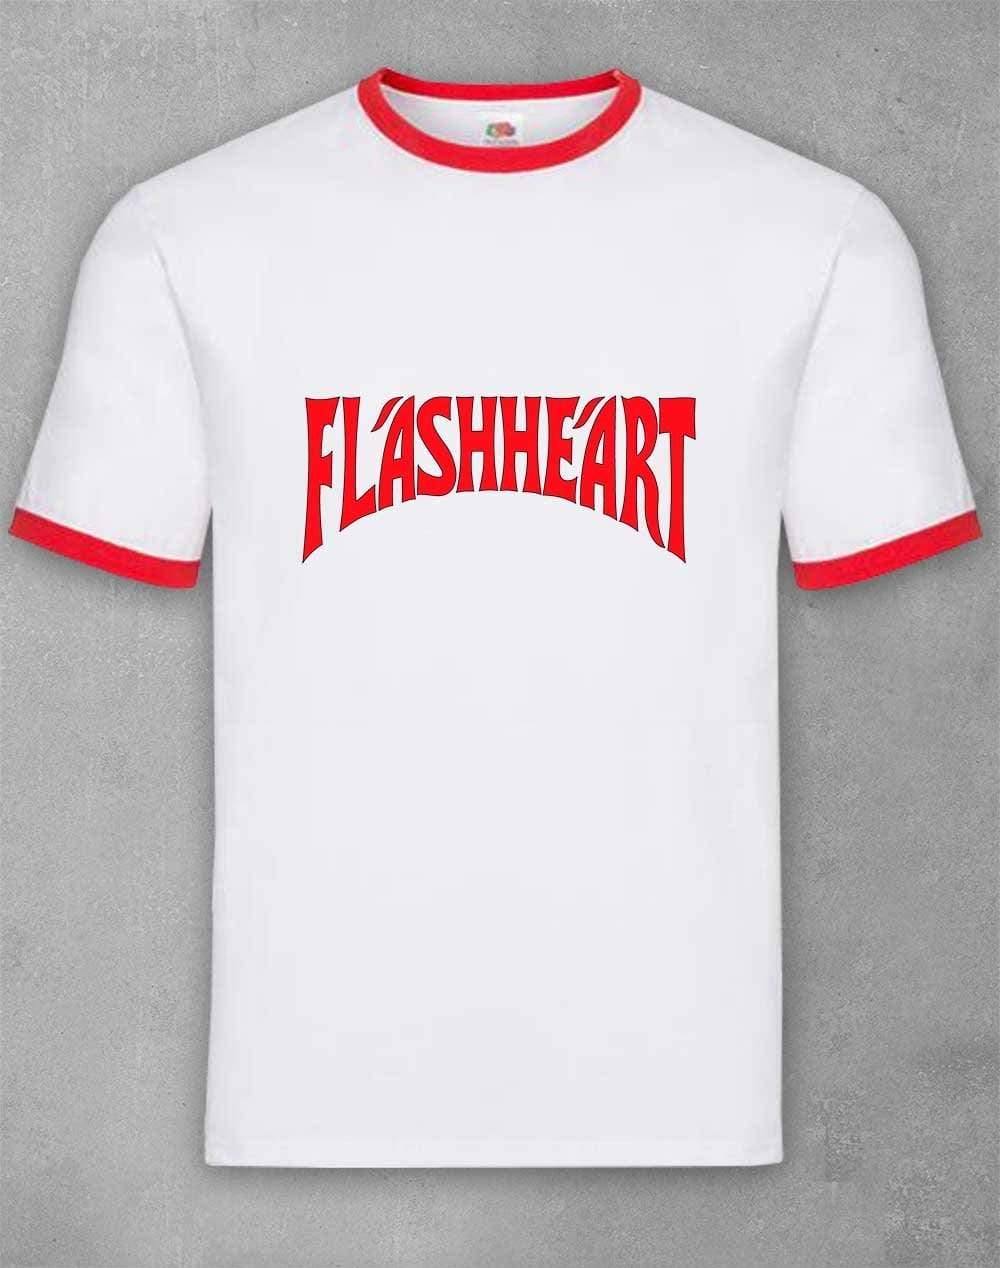 Flashheart Spoof Logo Ringer T-Shirt S / White Red  - Off World Tees